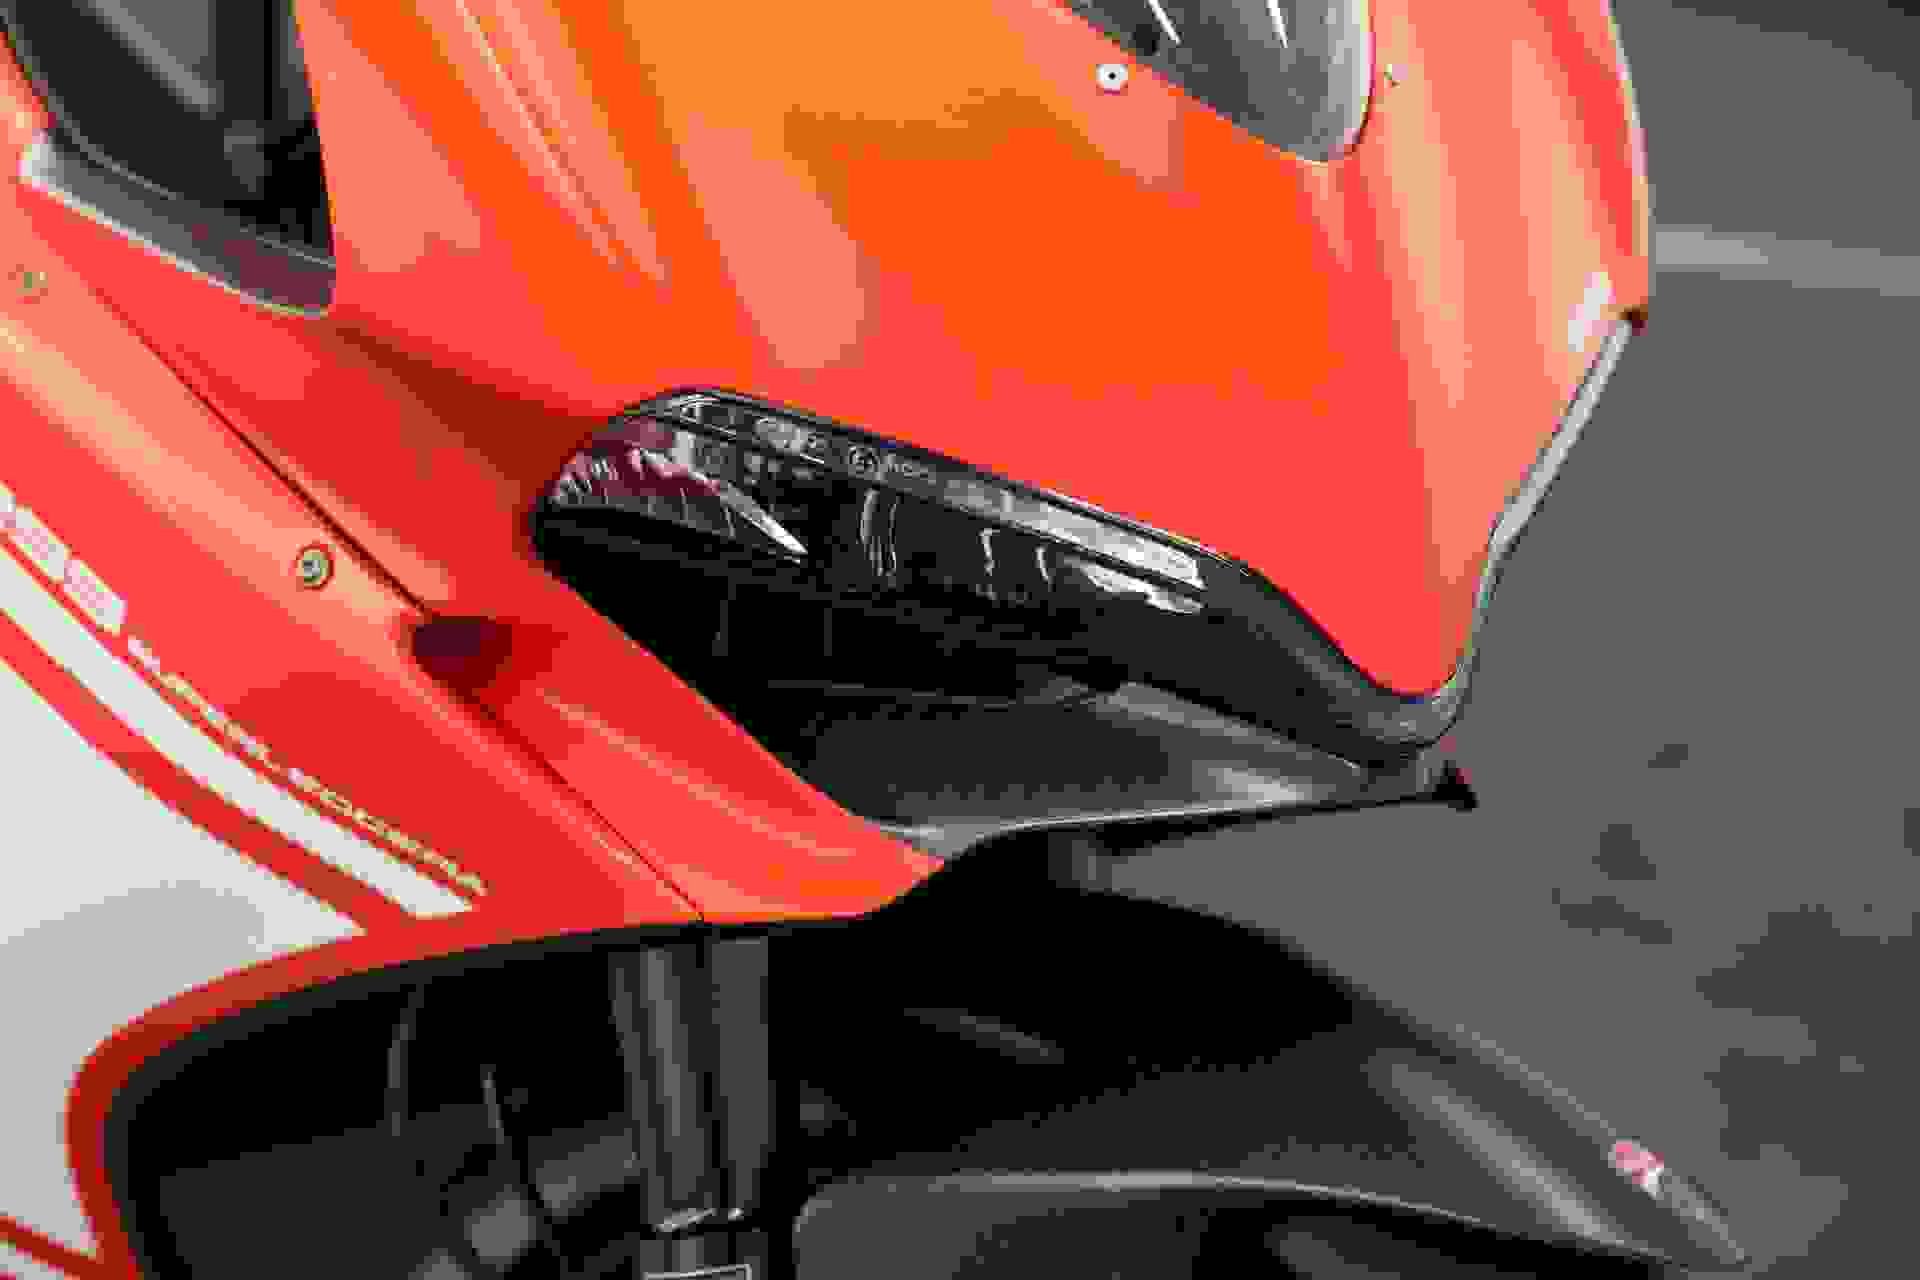 Ducati Superleggera Photo bfcf0b1b-062e-4060-968a-53e588bfe6f6.jpg